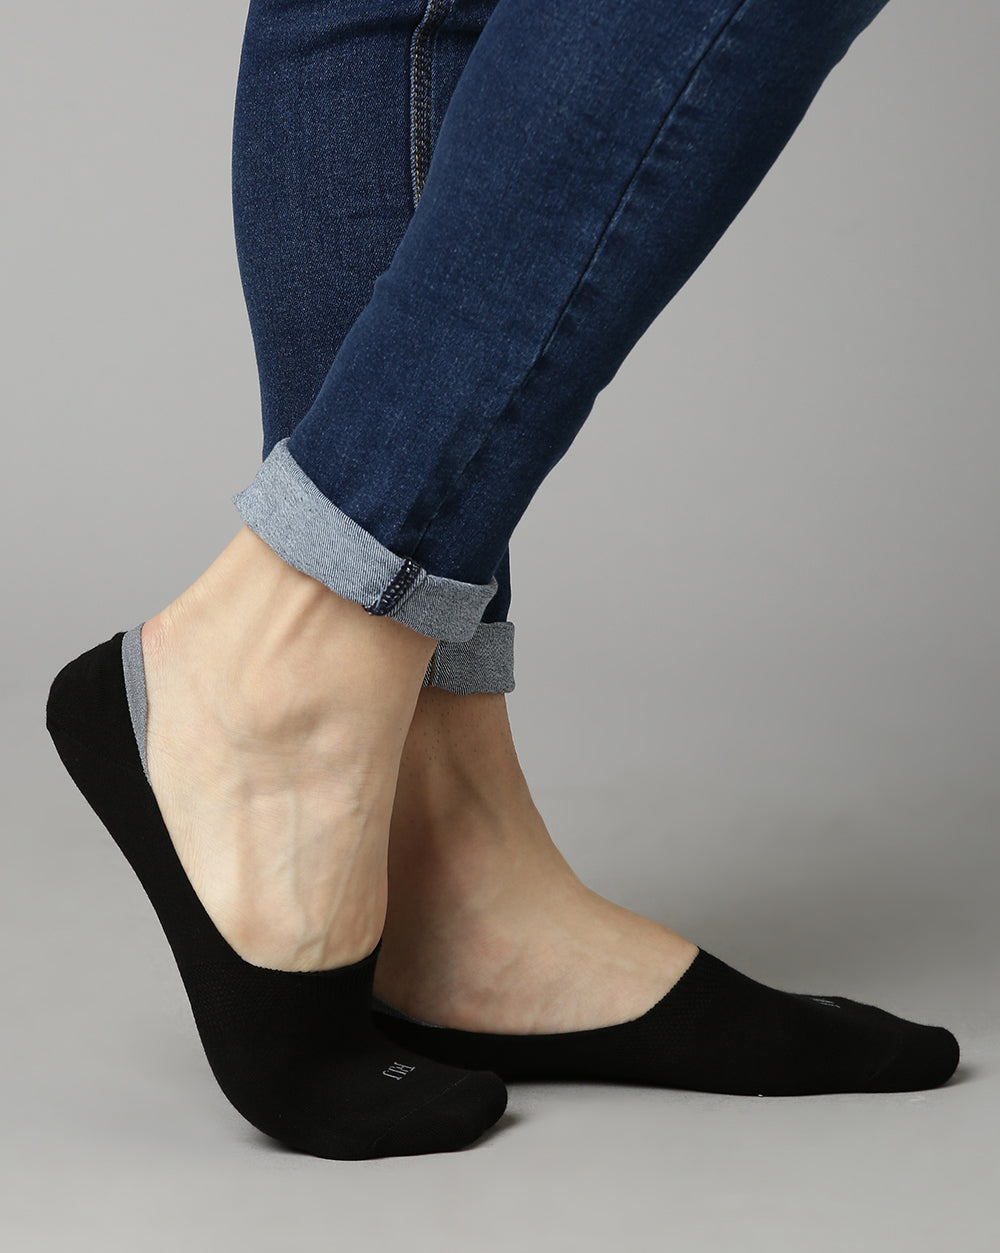 Loafer Socks - Black/Navy